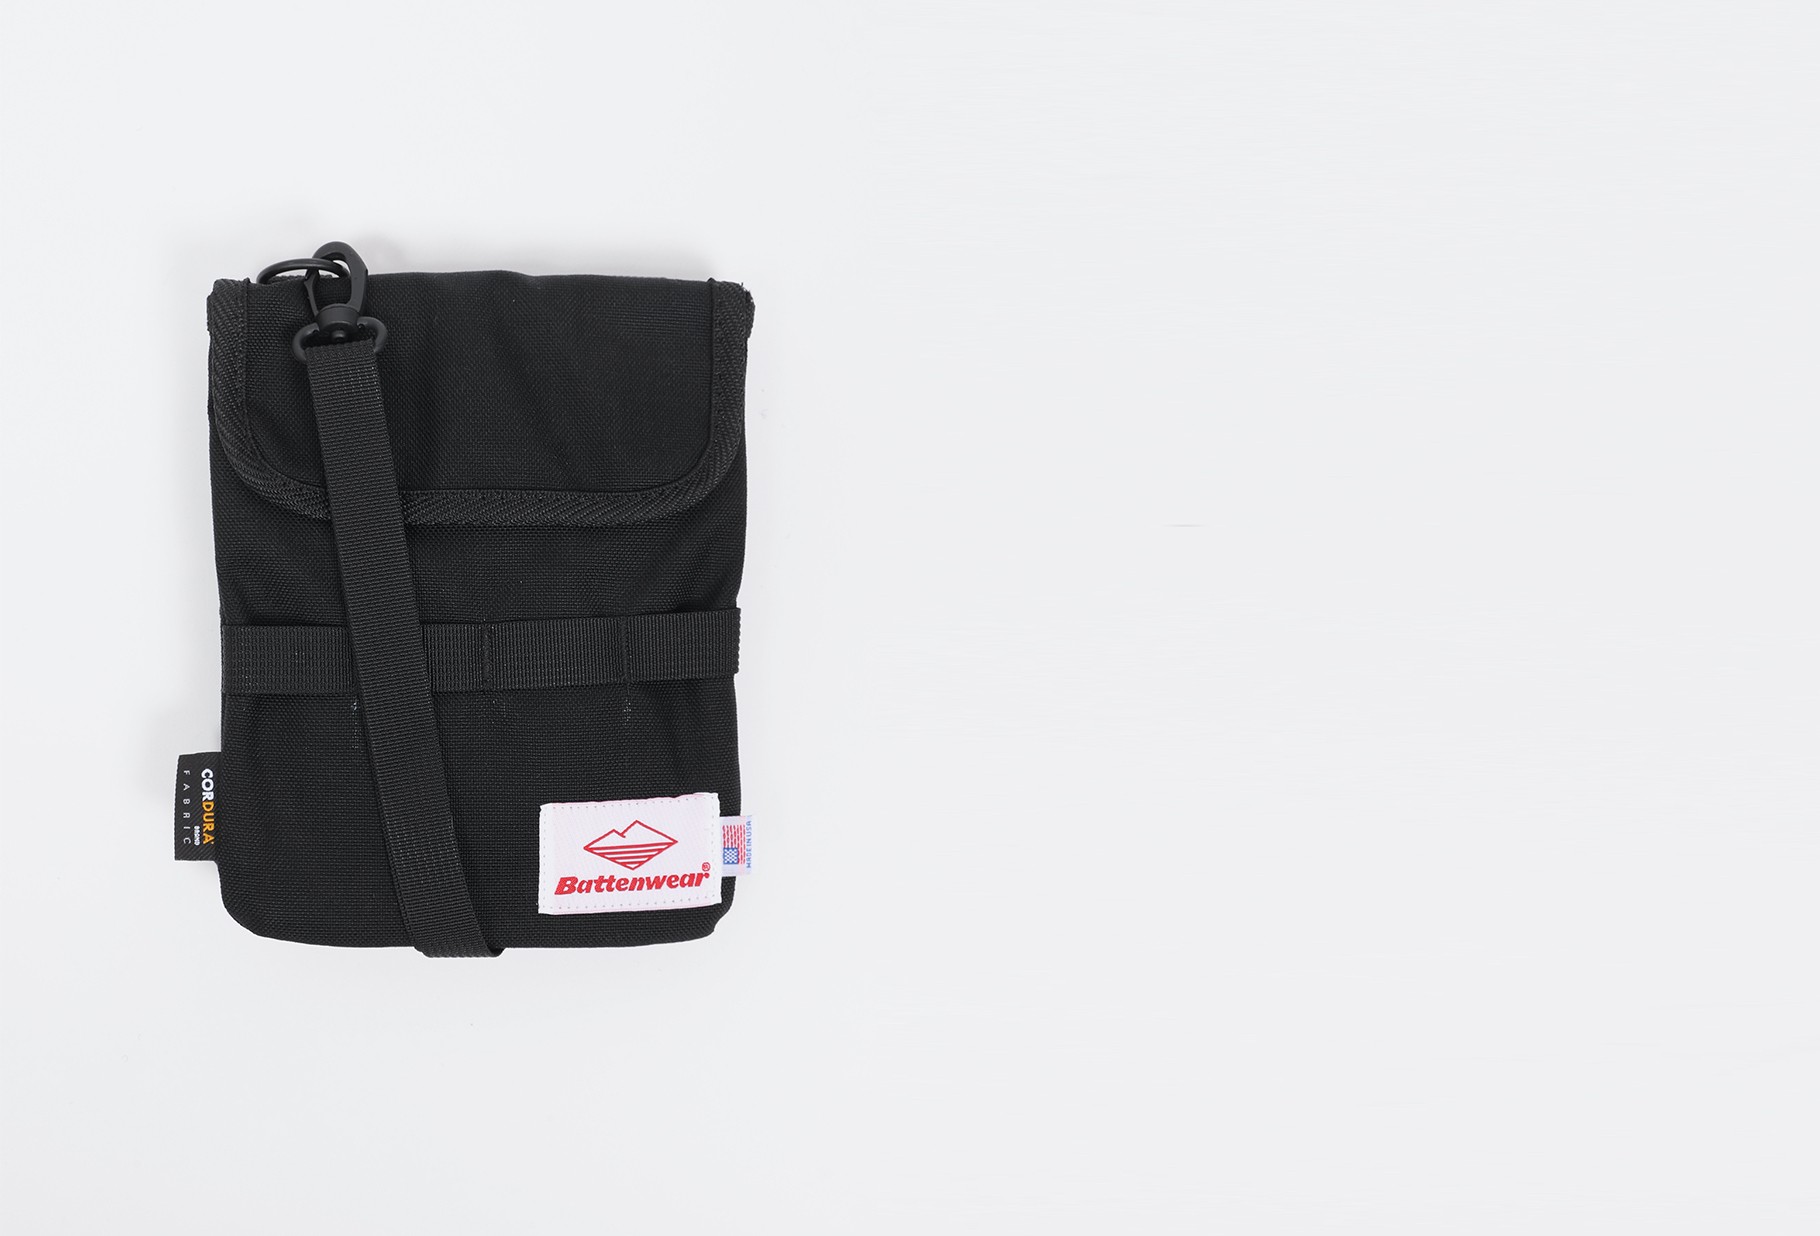 BATTENWEAR / Travel pouch v.2 cordura nylon Black